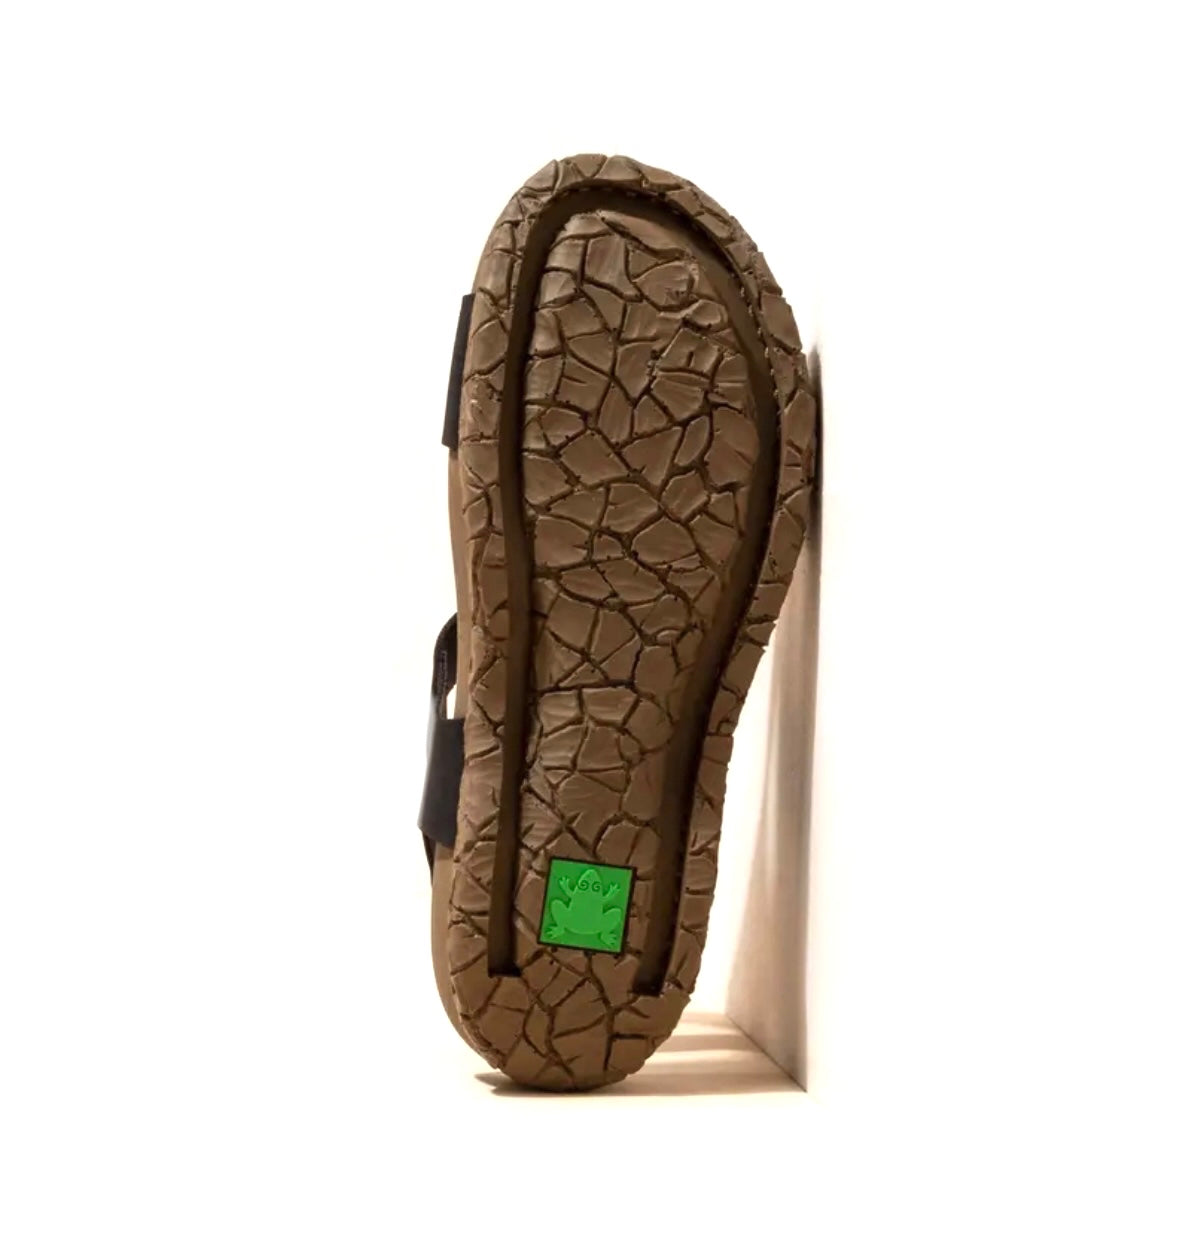 El Naturalista 5861T Black Tabernas Sion Vegan Velcro Sandal Made In Spain